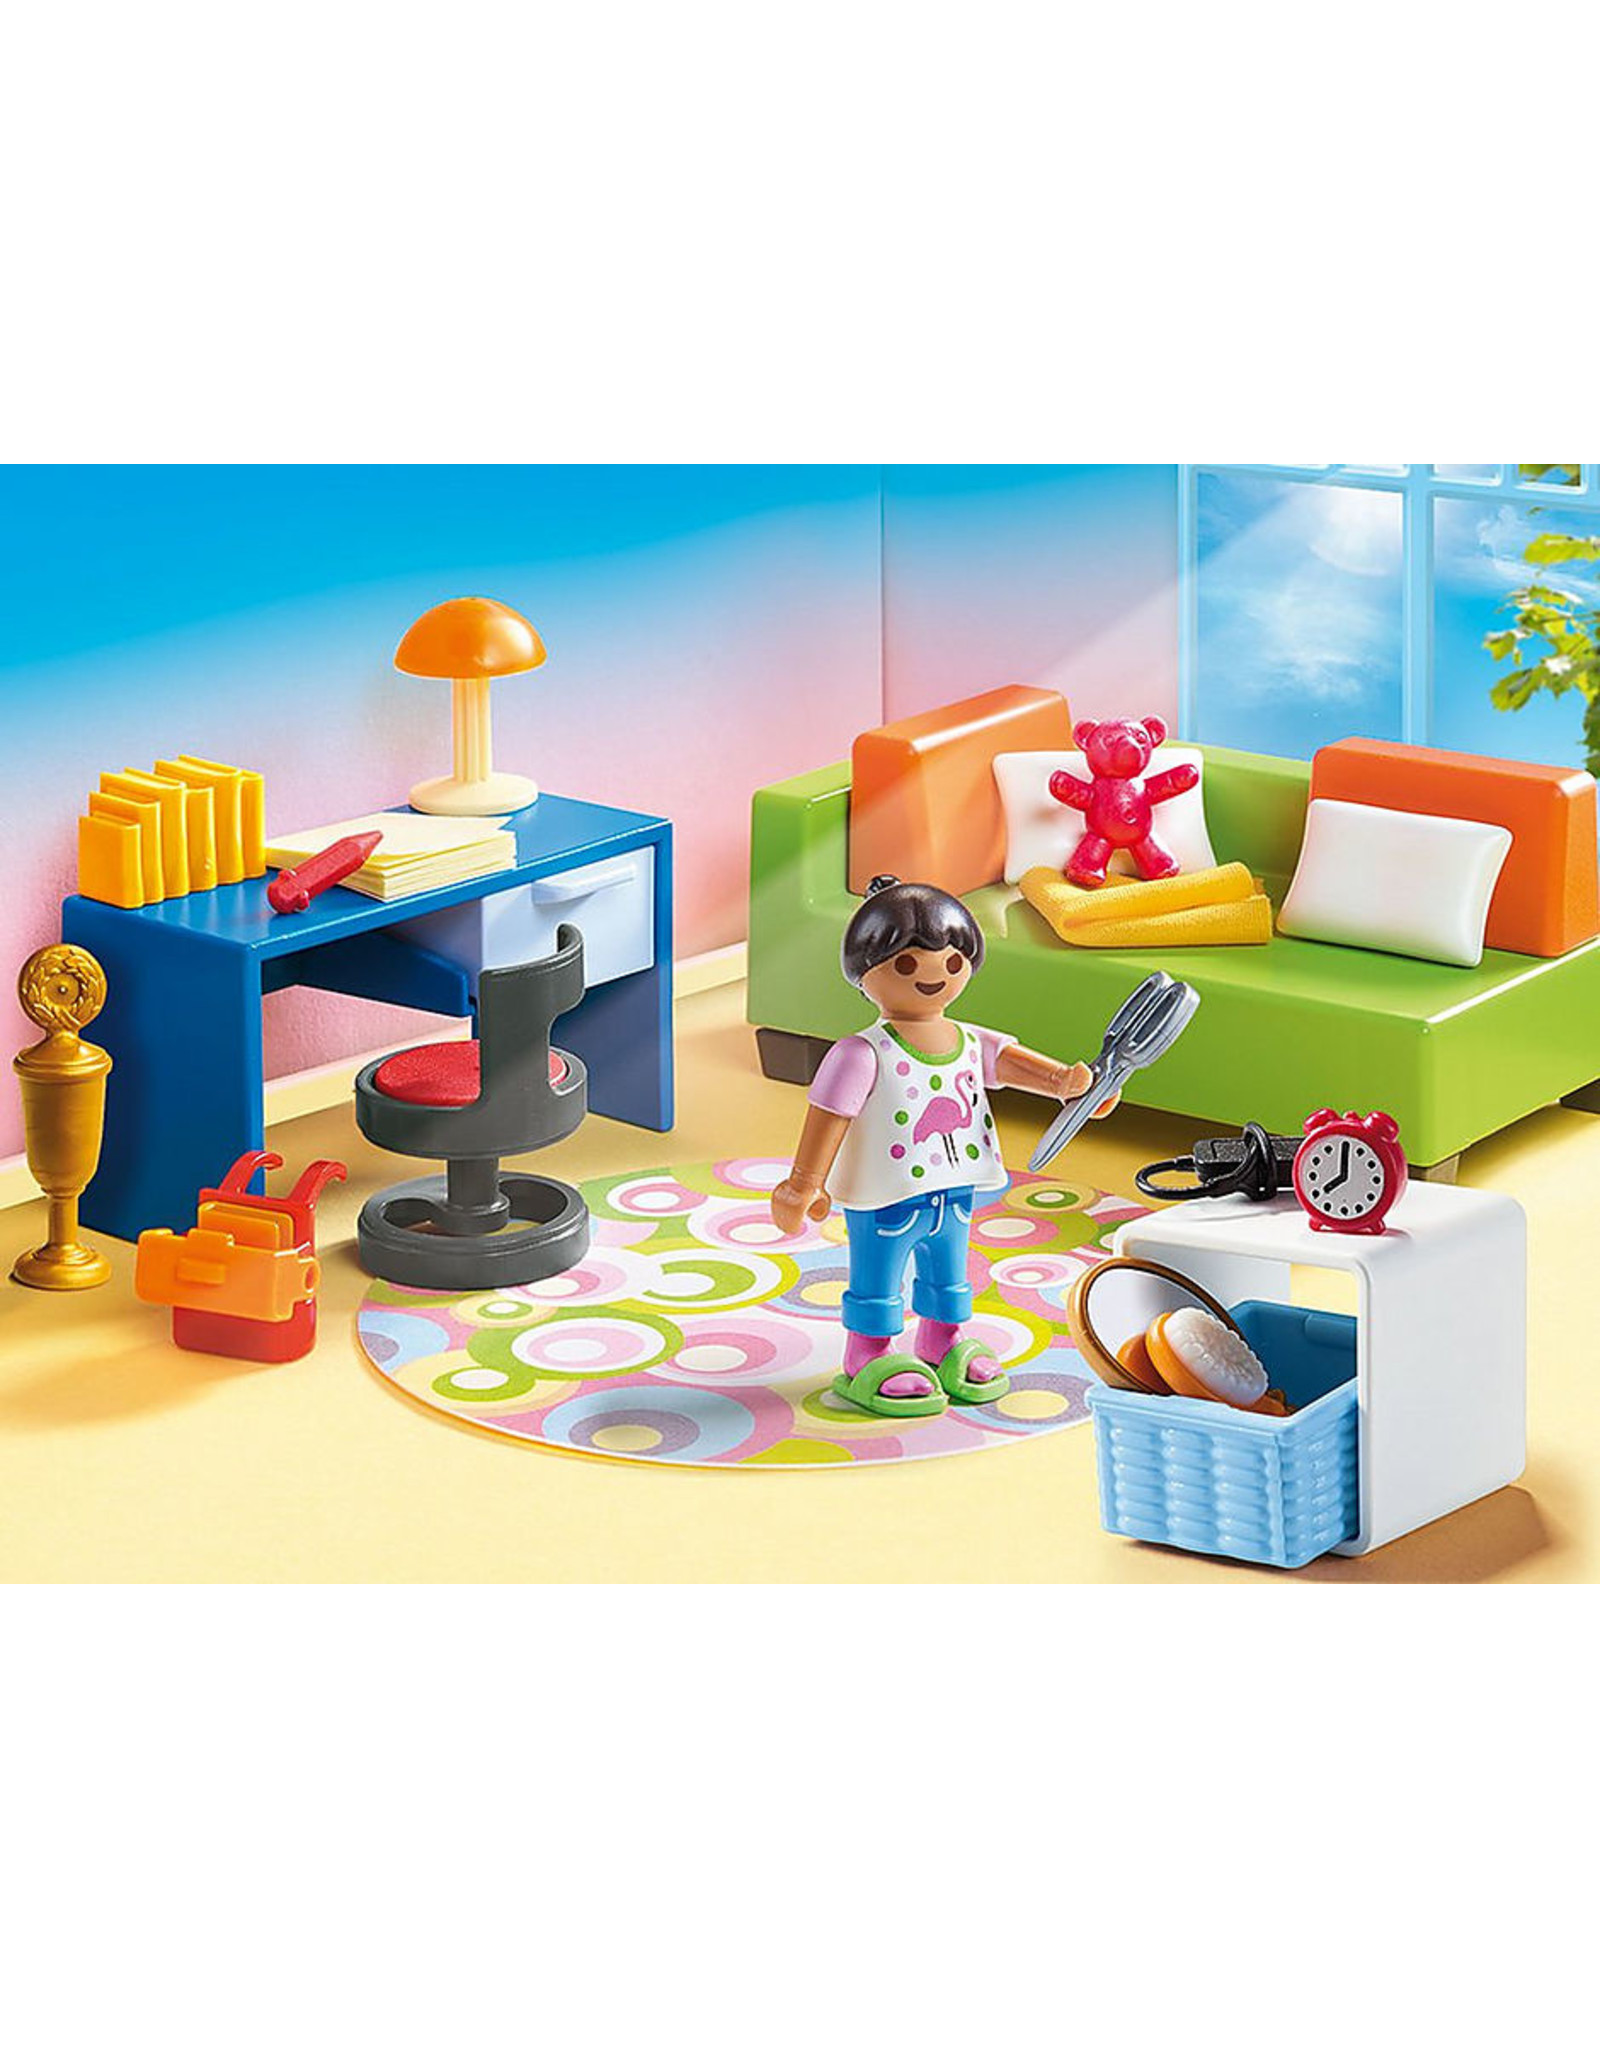 Playmobil Teenager's Room